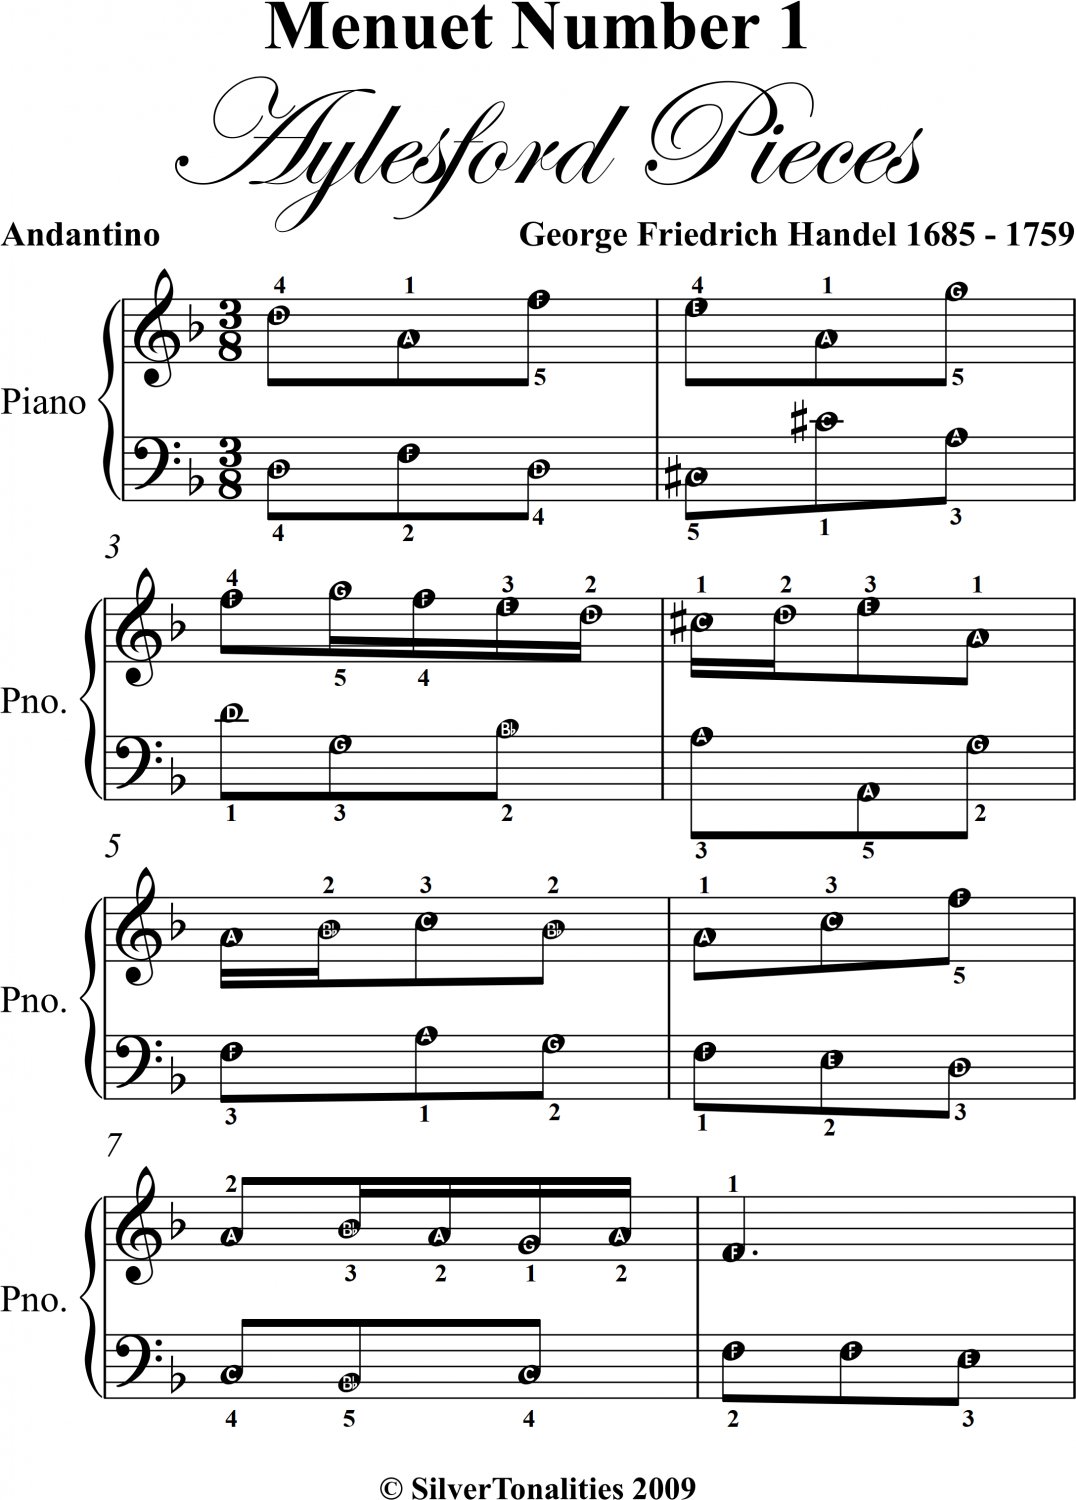 Menuet 1 Andantino Aylesford Pieces Easy Piano Sheet Music